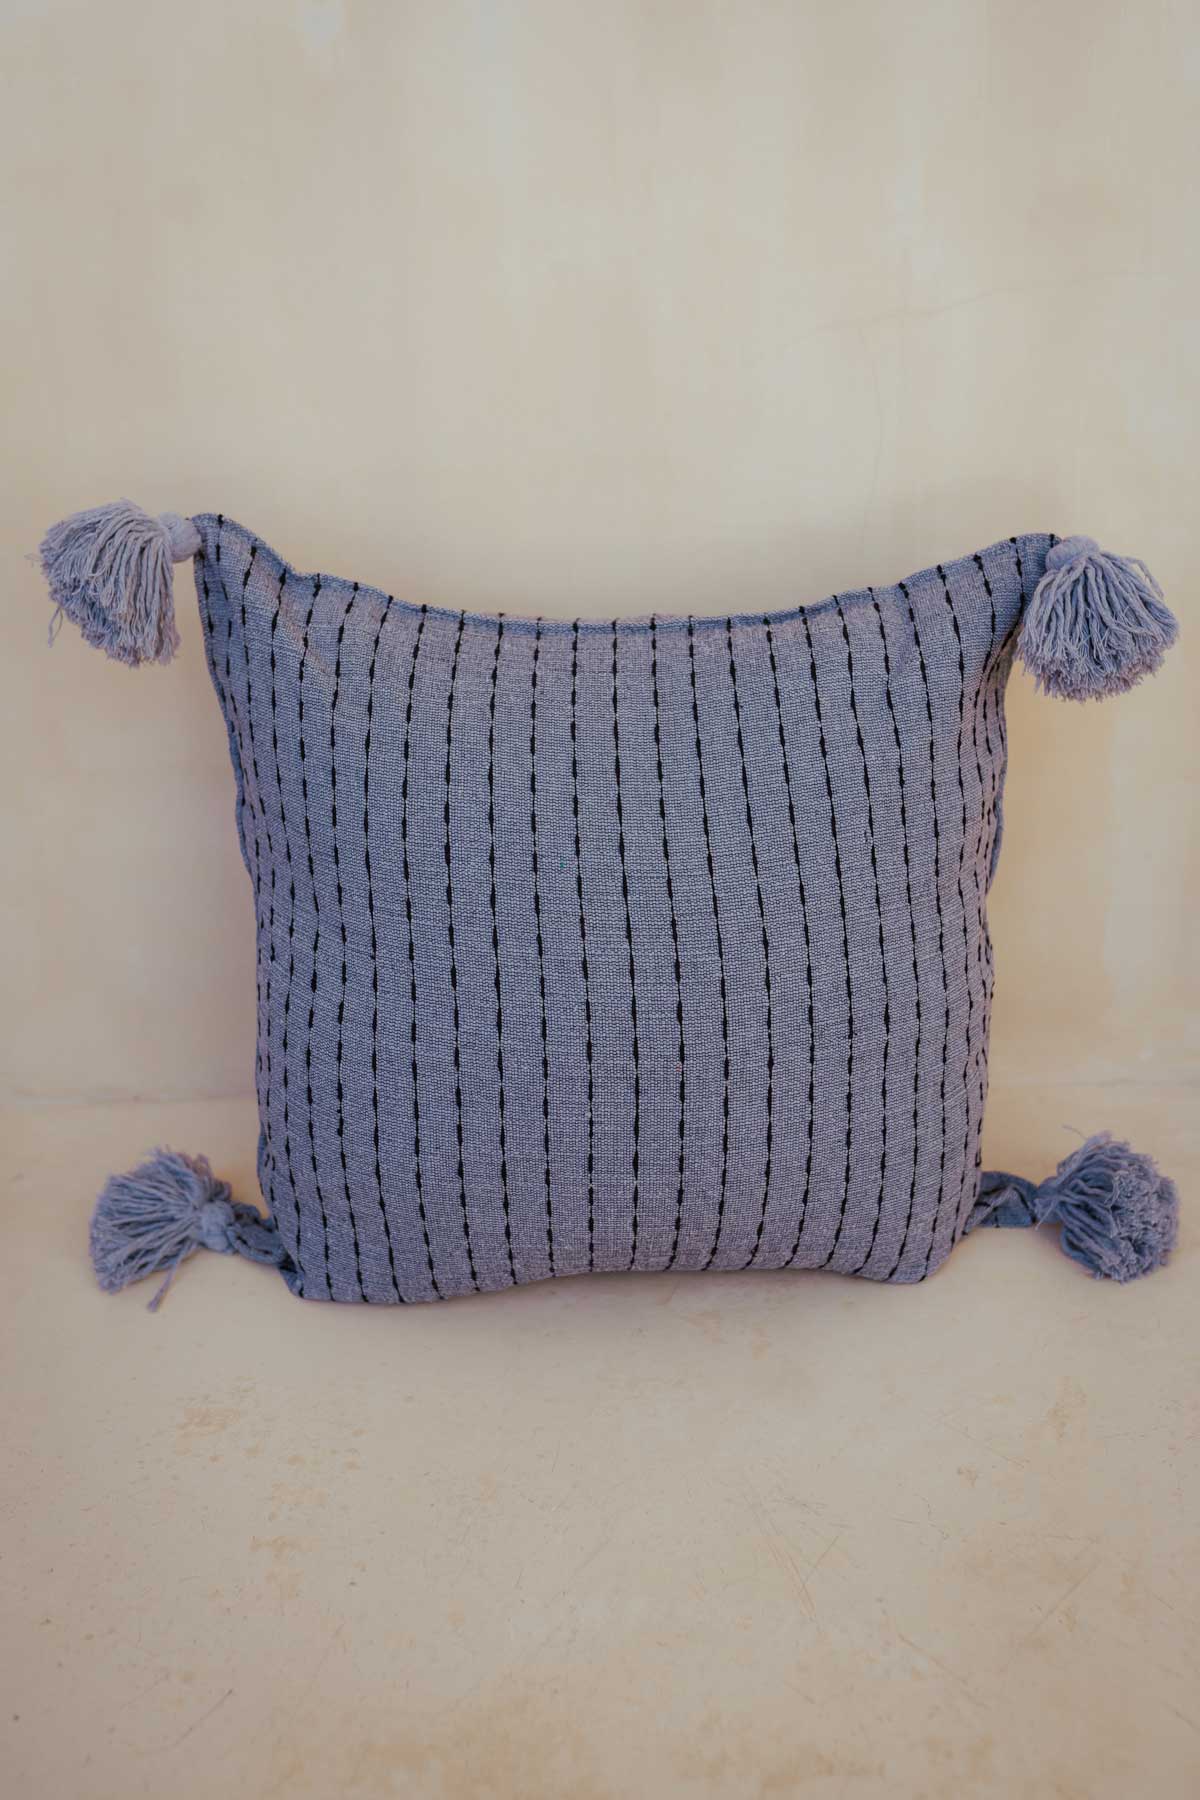 Handmade Cotton Throw Pillow with Tassels | Grey Blue